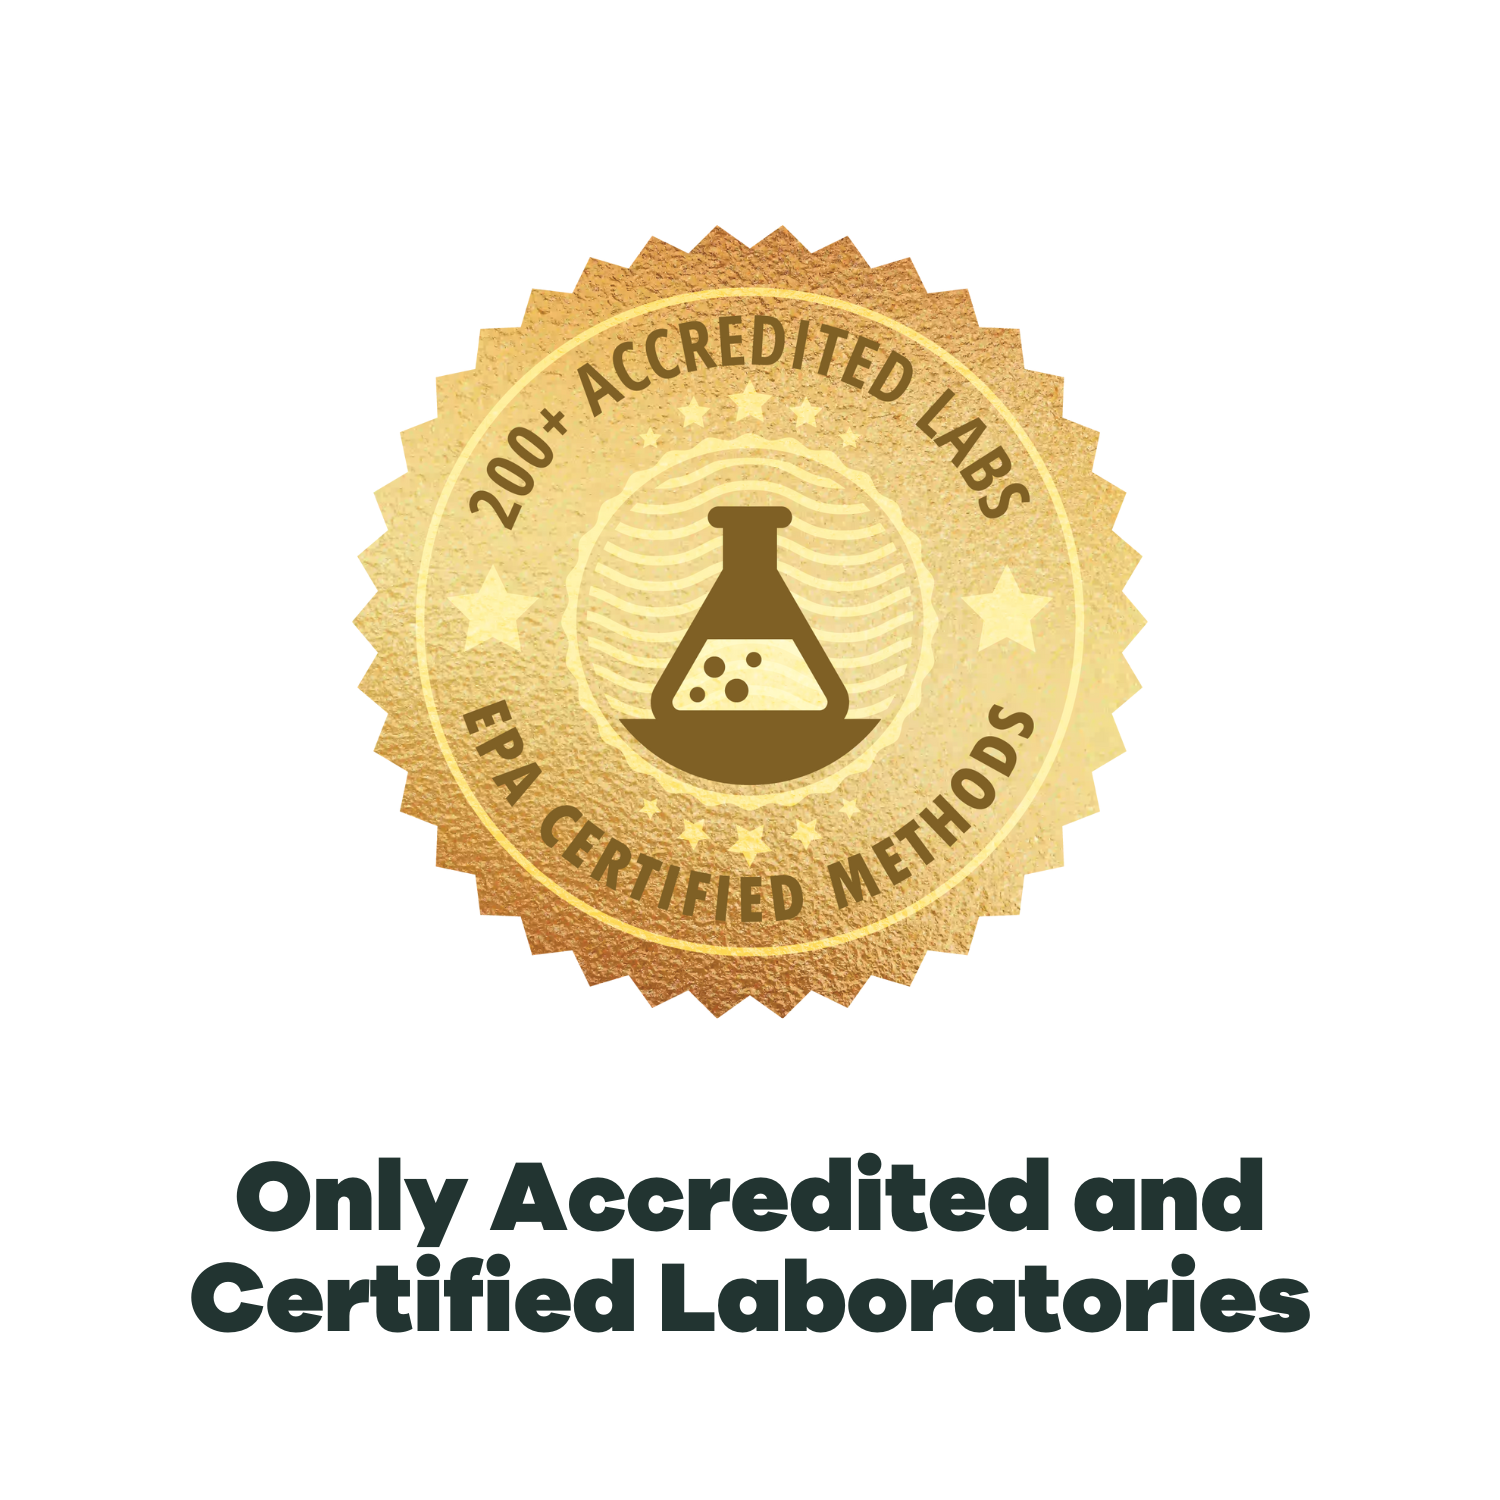 Certified Laboratory Testing